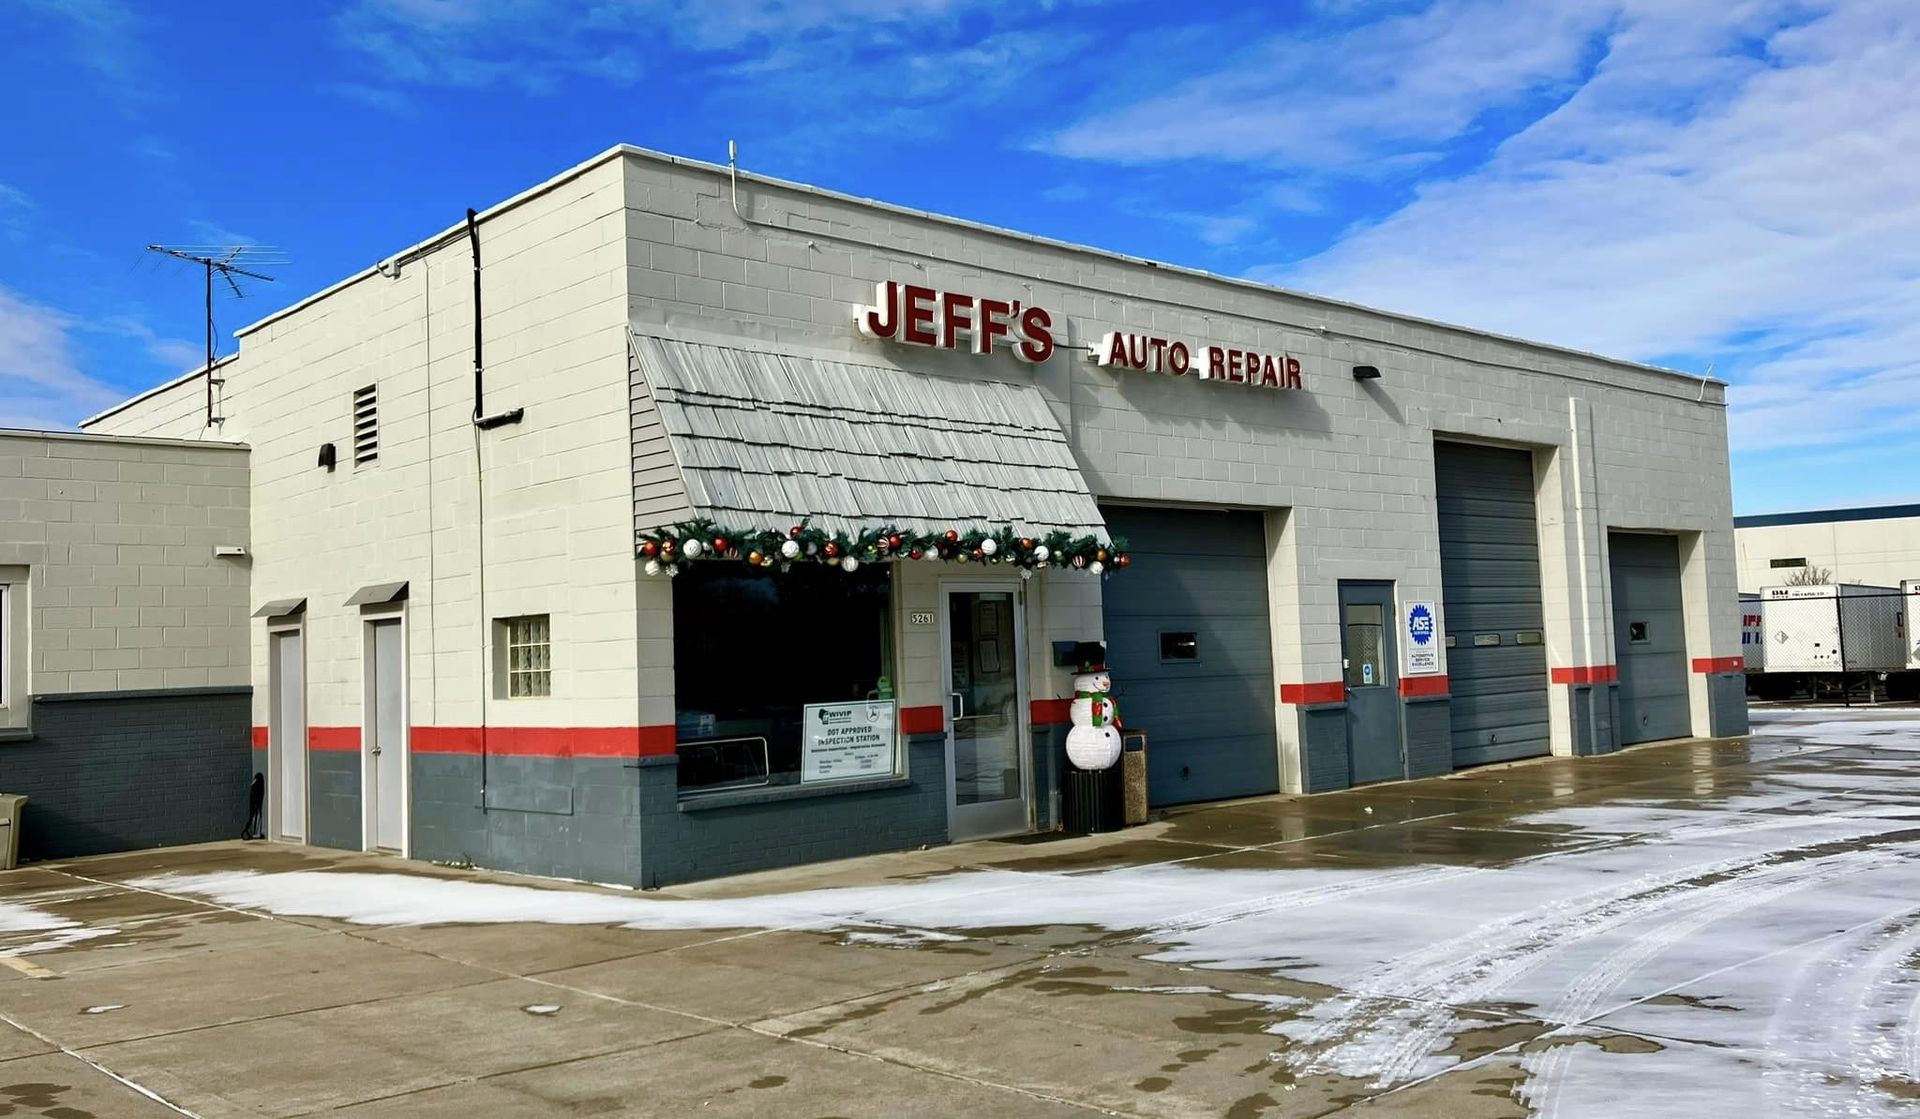 Reasons Your Car Heater Needs Service - Jeff's Automotive, Inc